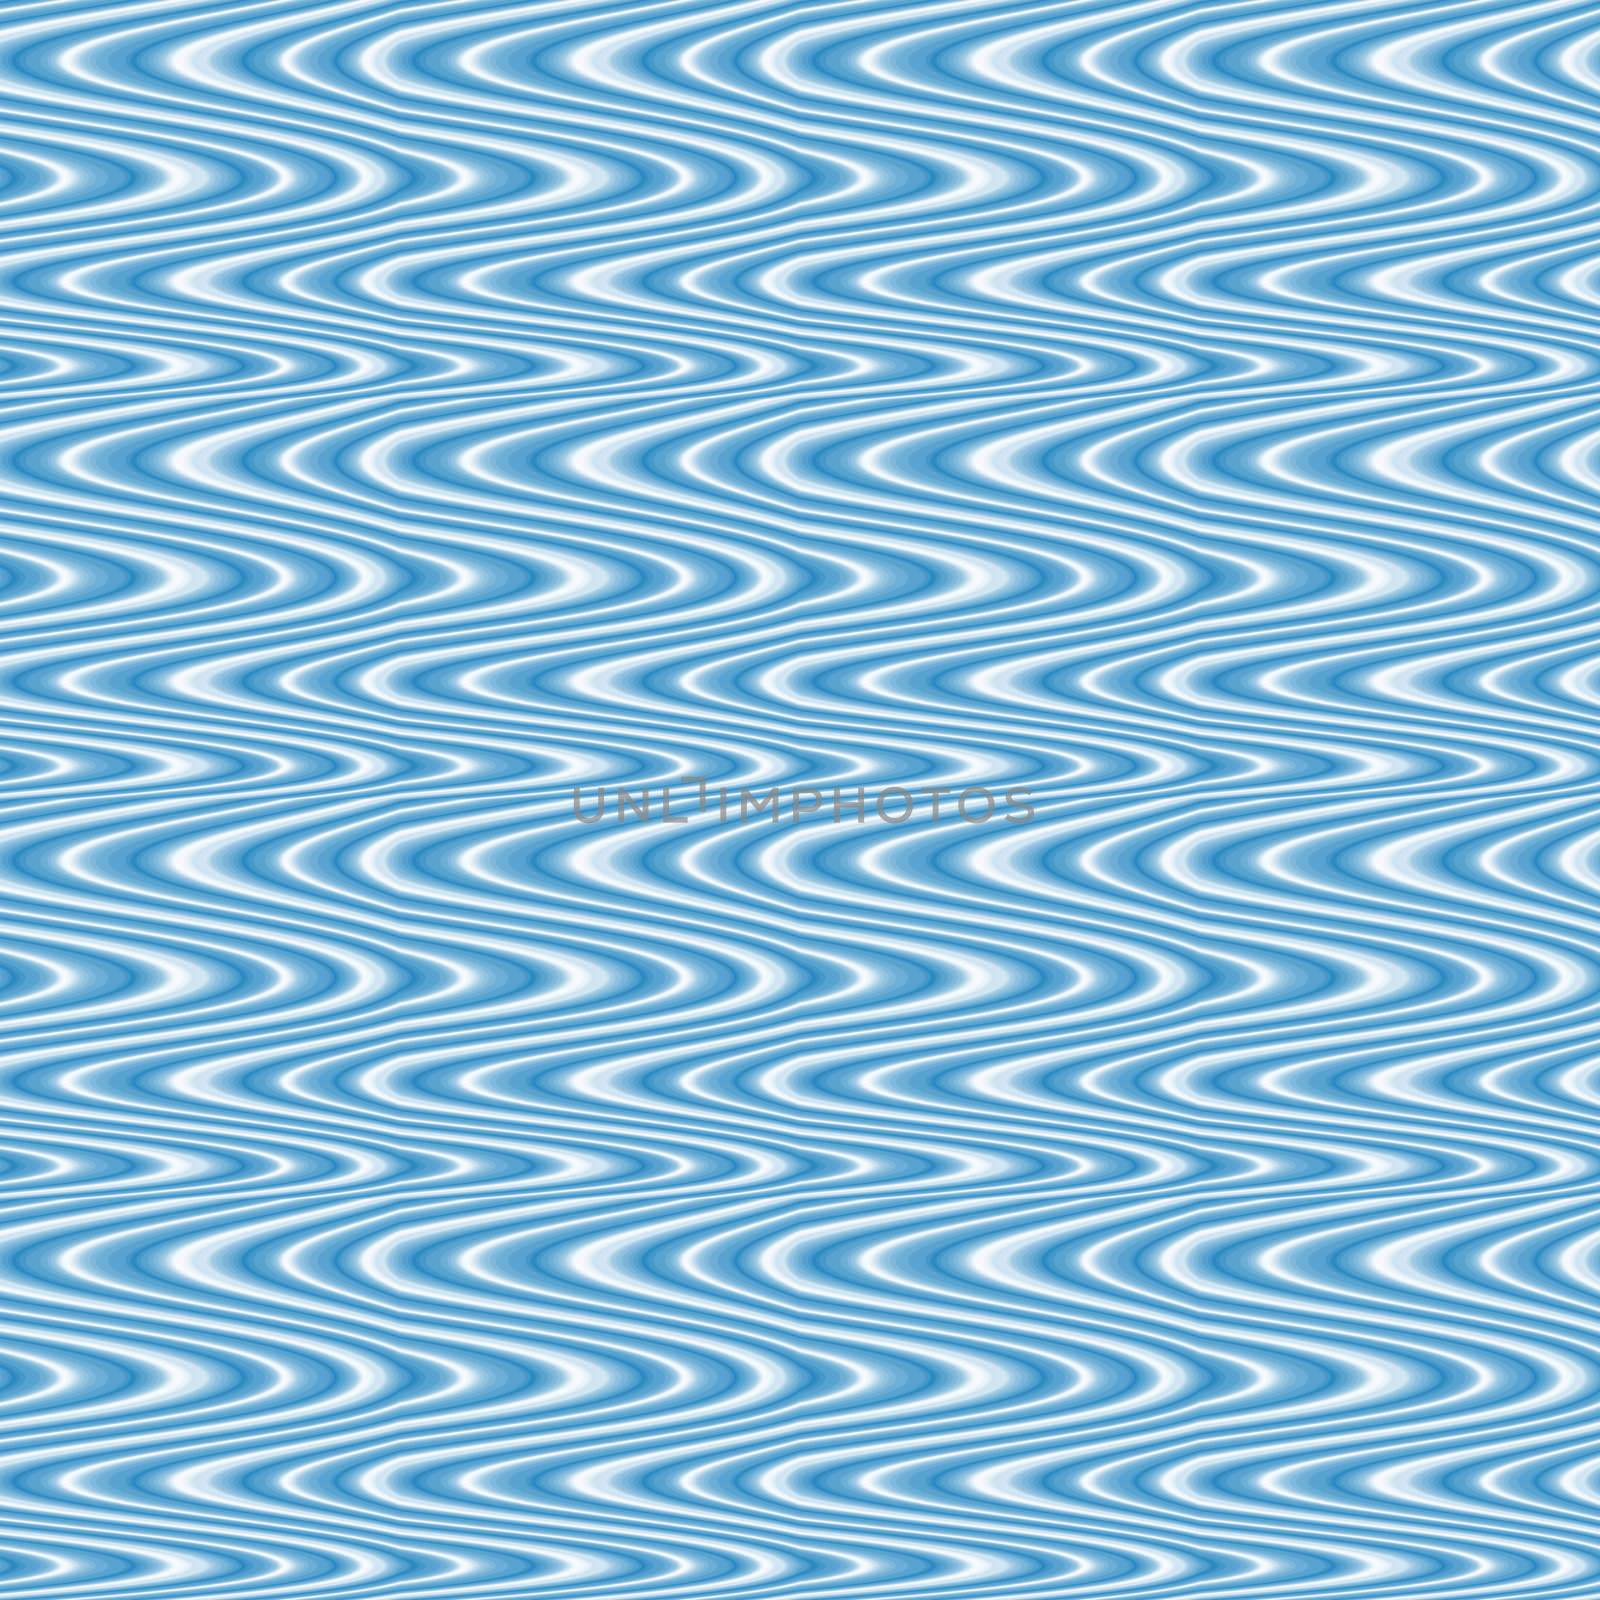 Blue waves 1 by hospitalera